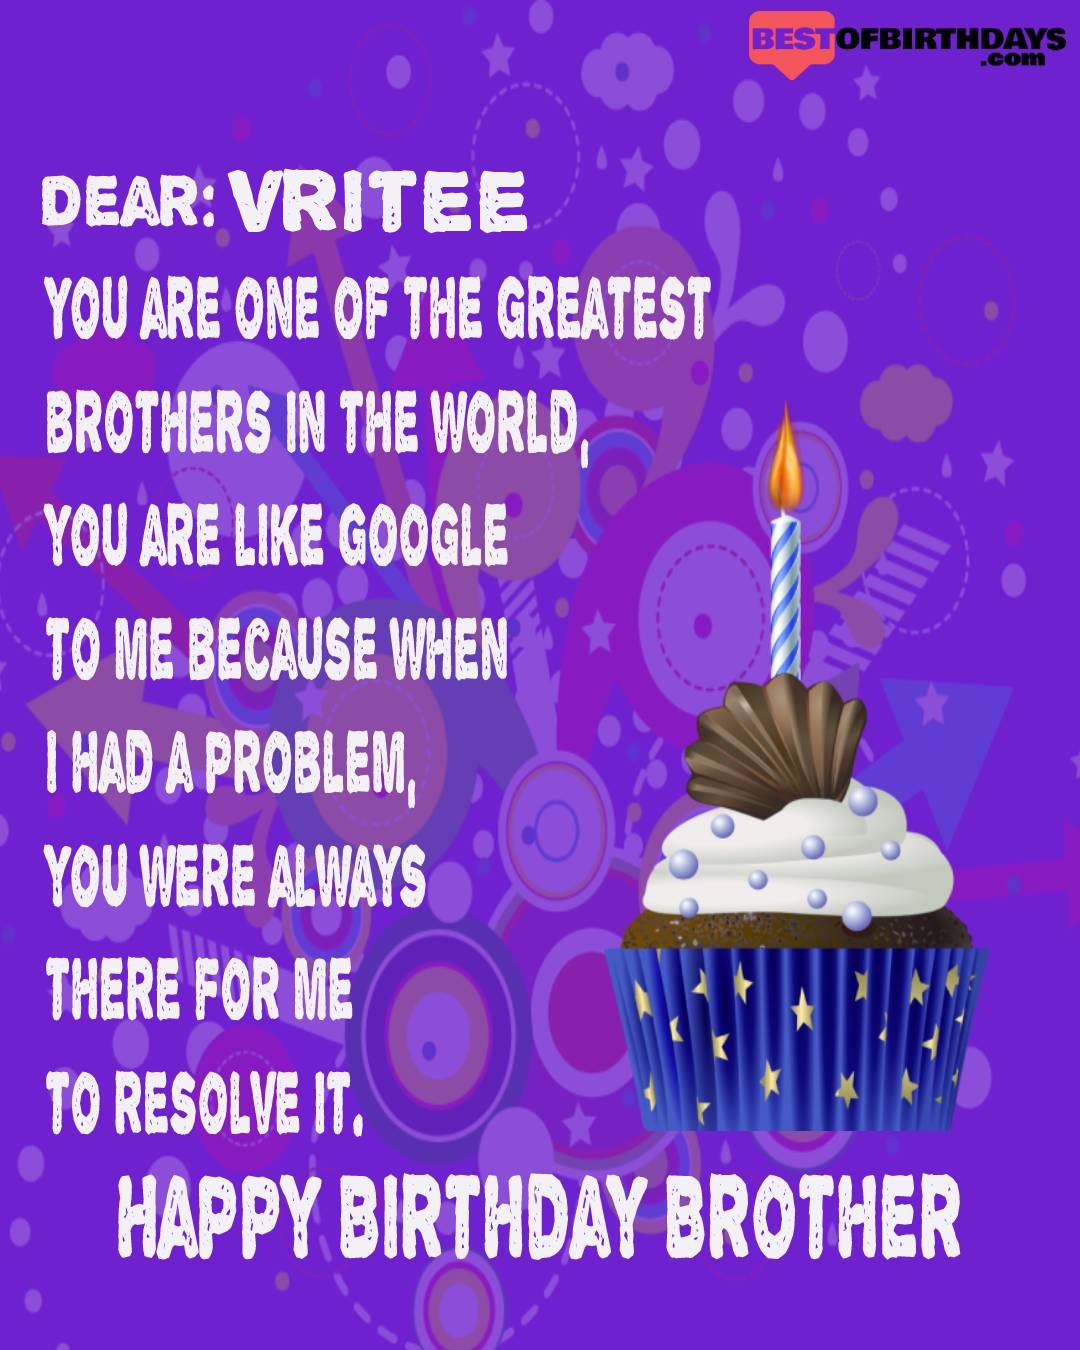 Happy birthday vritee bhai brother bro